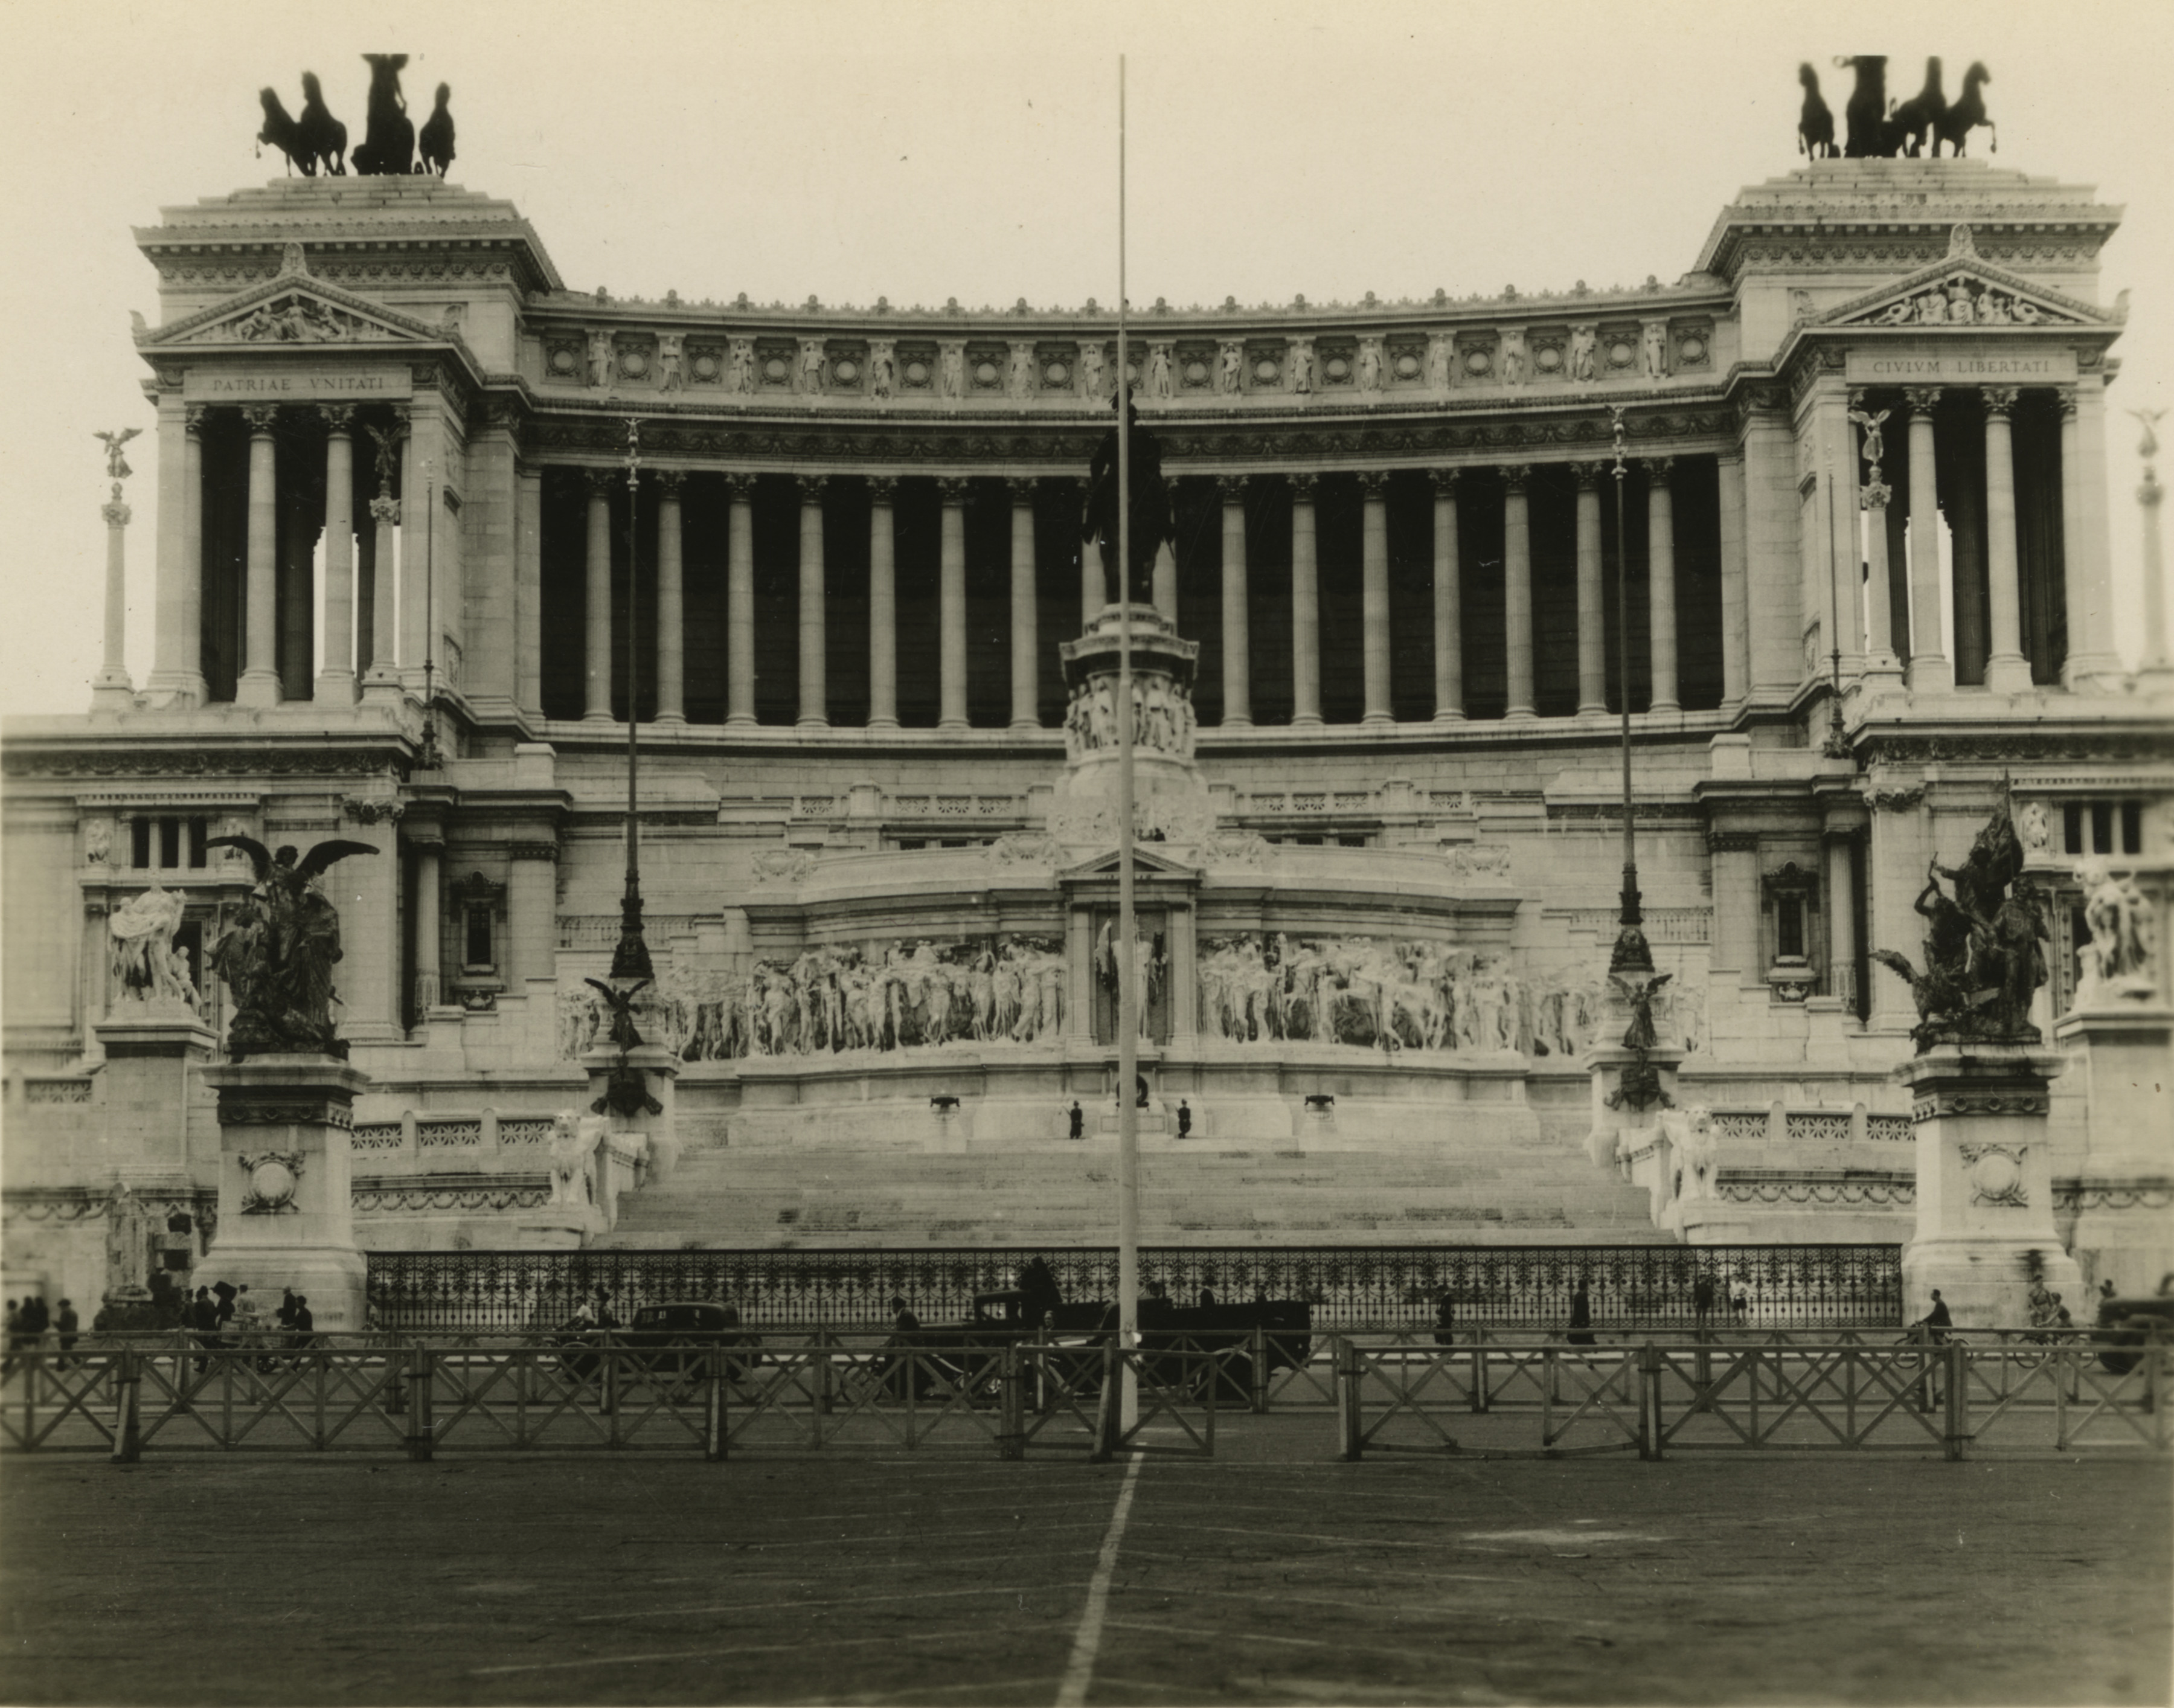 File:Vittorio Emanuele II Monument.jpg - Wikimedia Commons